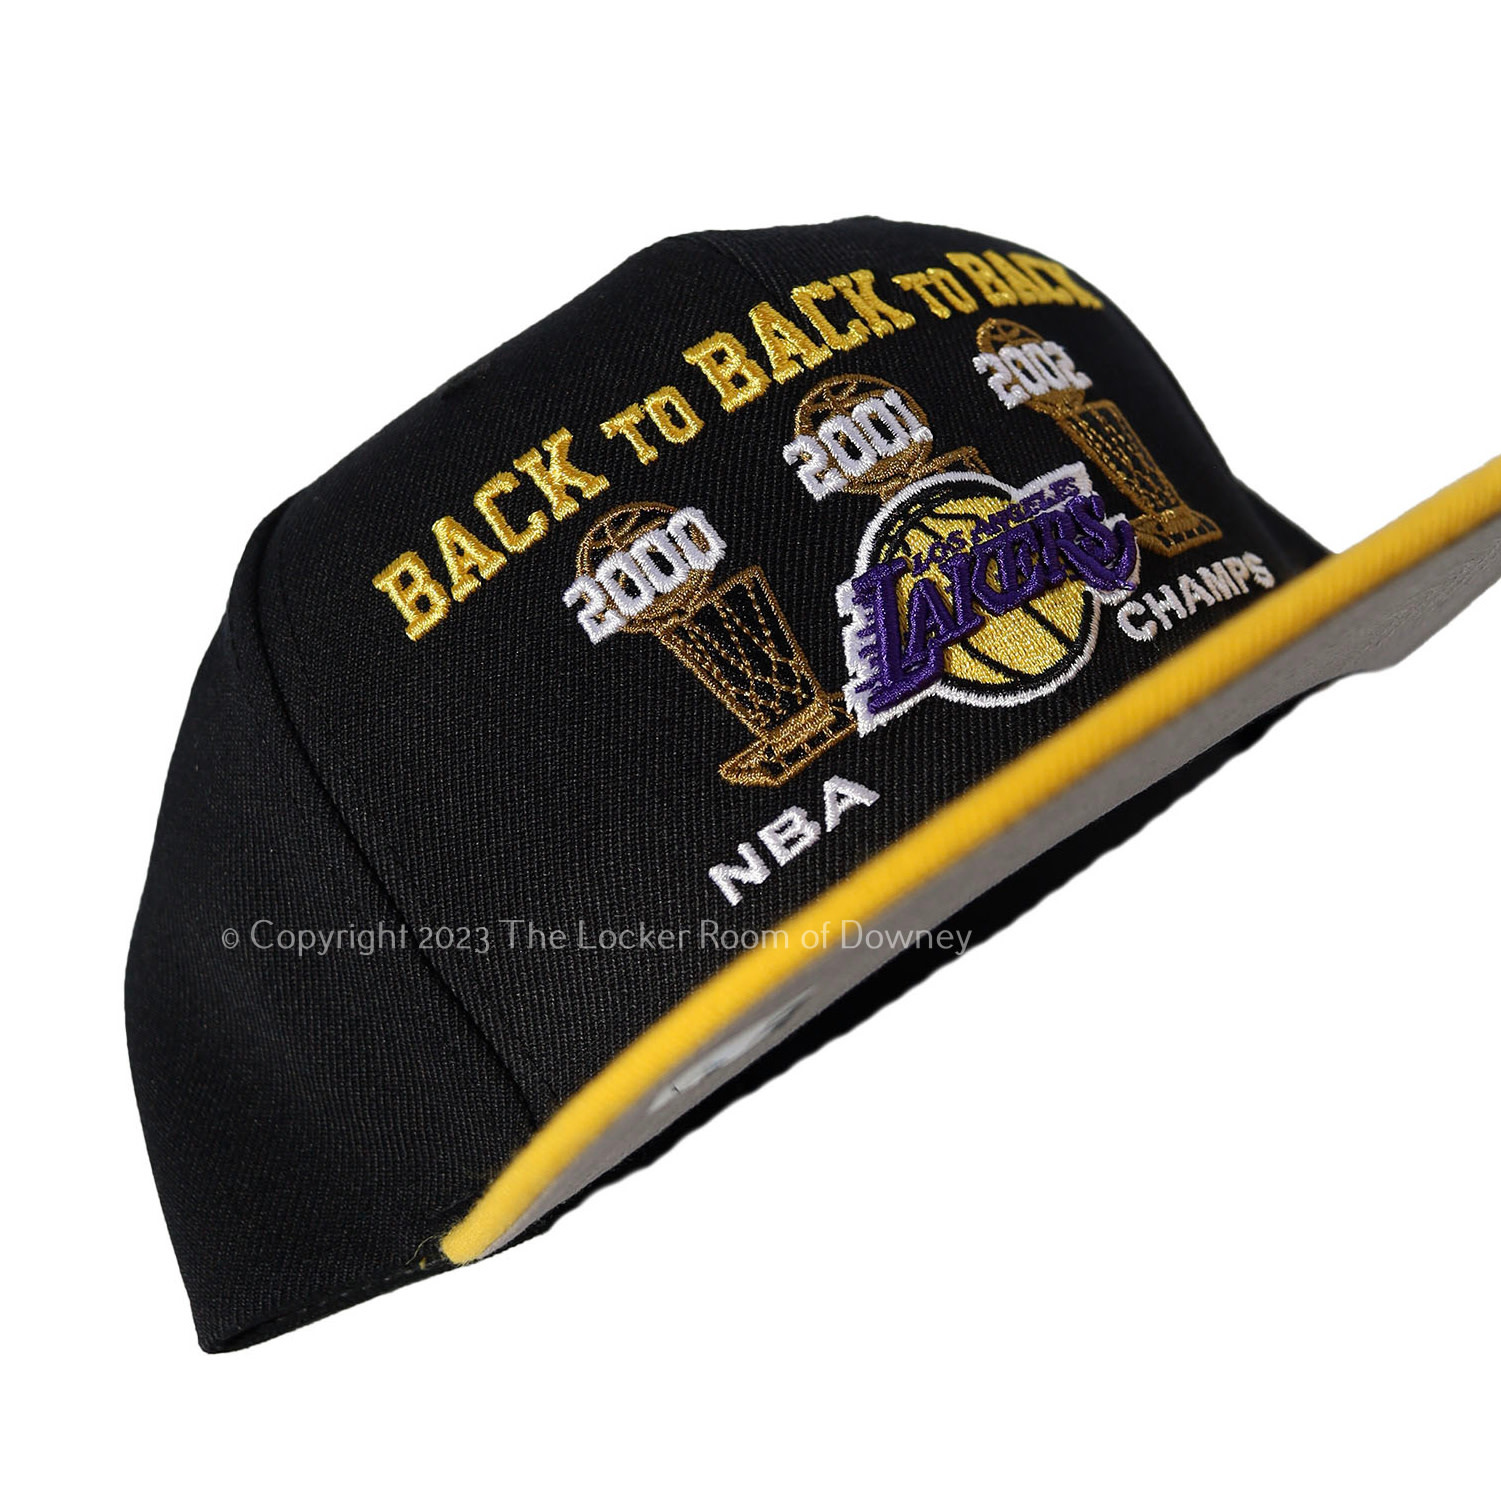 Los Angeles Lakers Onmi Branded Snapback Cap – Lakers Store